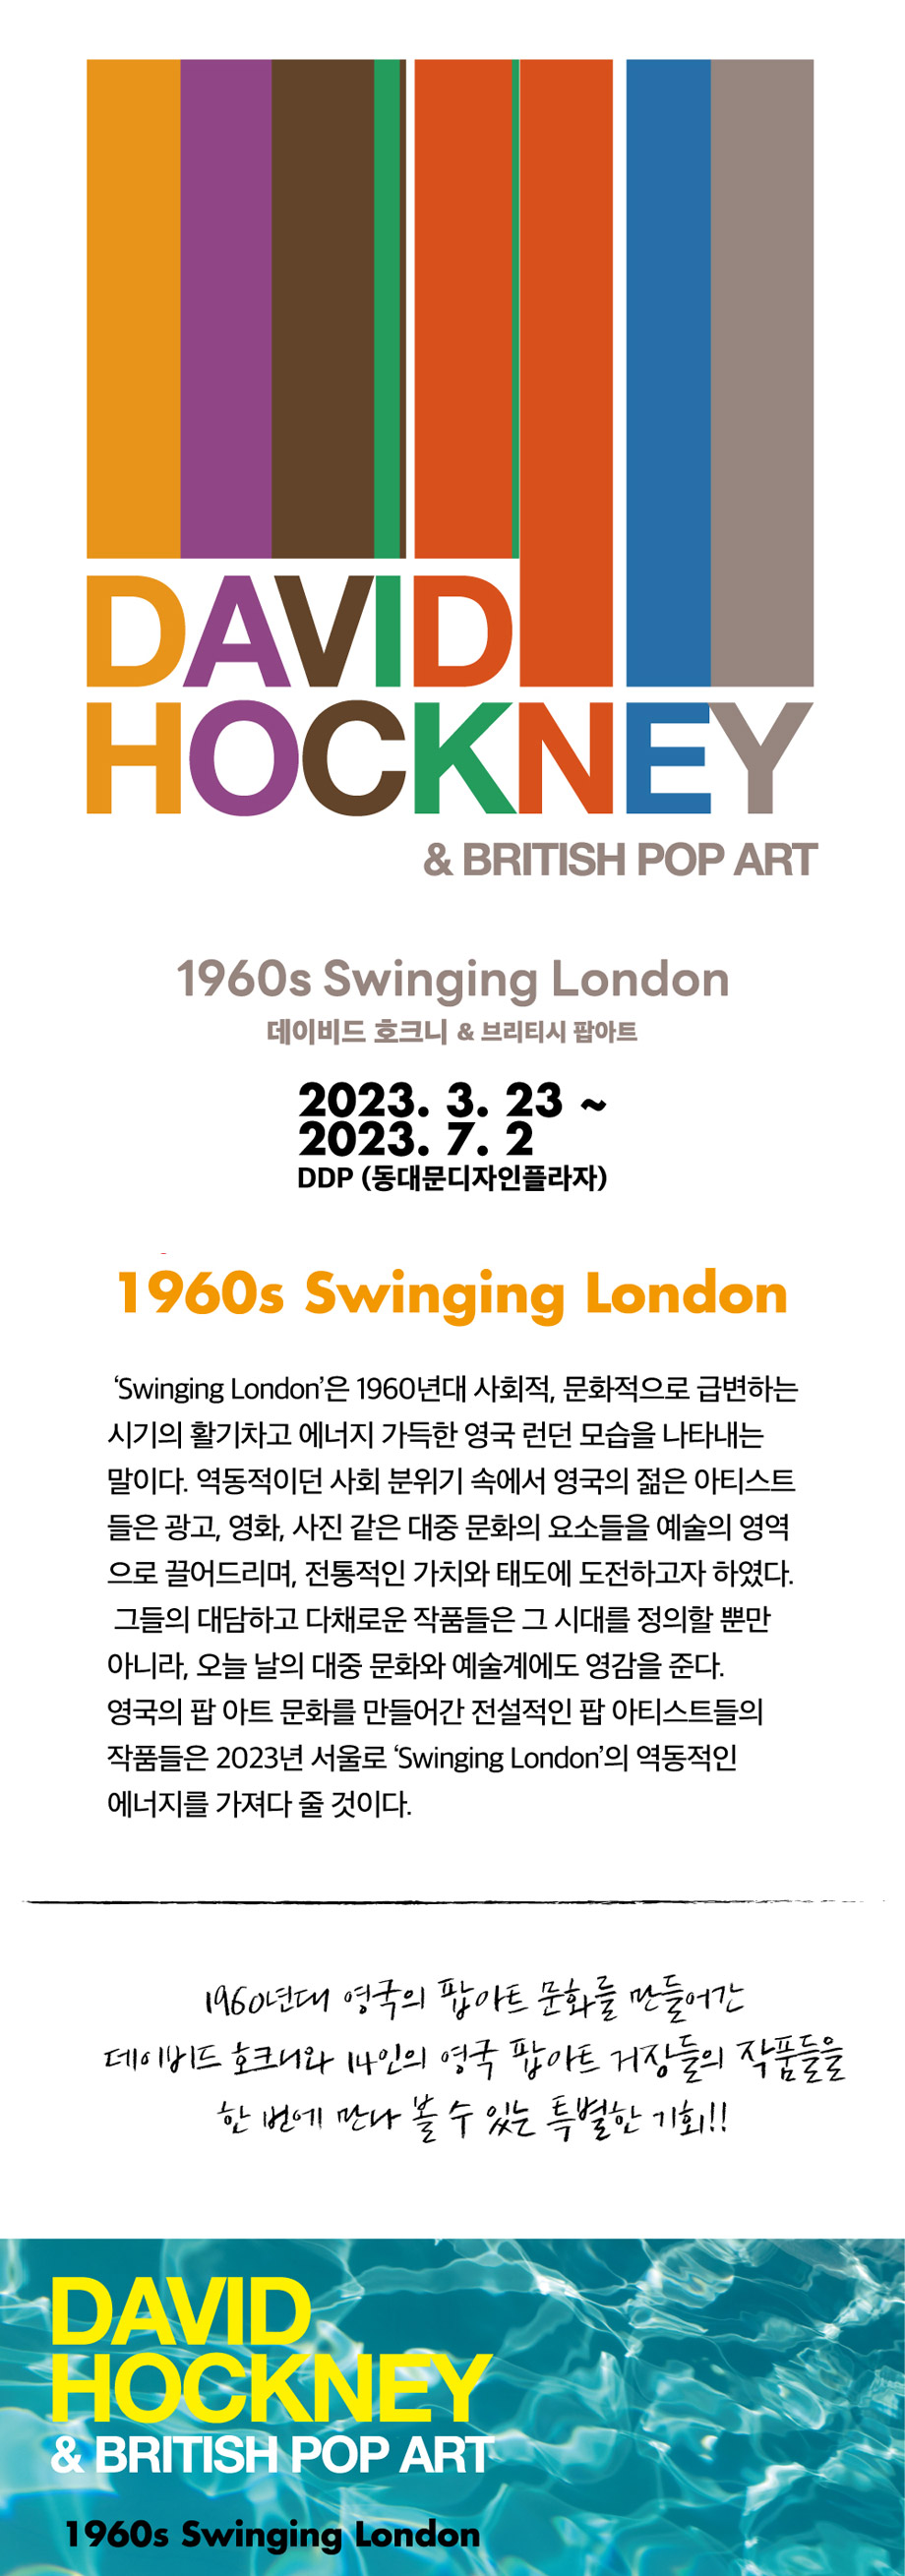 DAVID HOCKNEY & BRITISH POP ART(1960s Swinging London 데이비드 호크니 & 브리티시 팝아트) 2023년 3월 23일부터 2023년 7월 2일까지 DDP 동대문디자인플라자